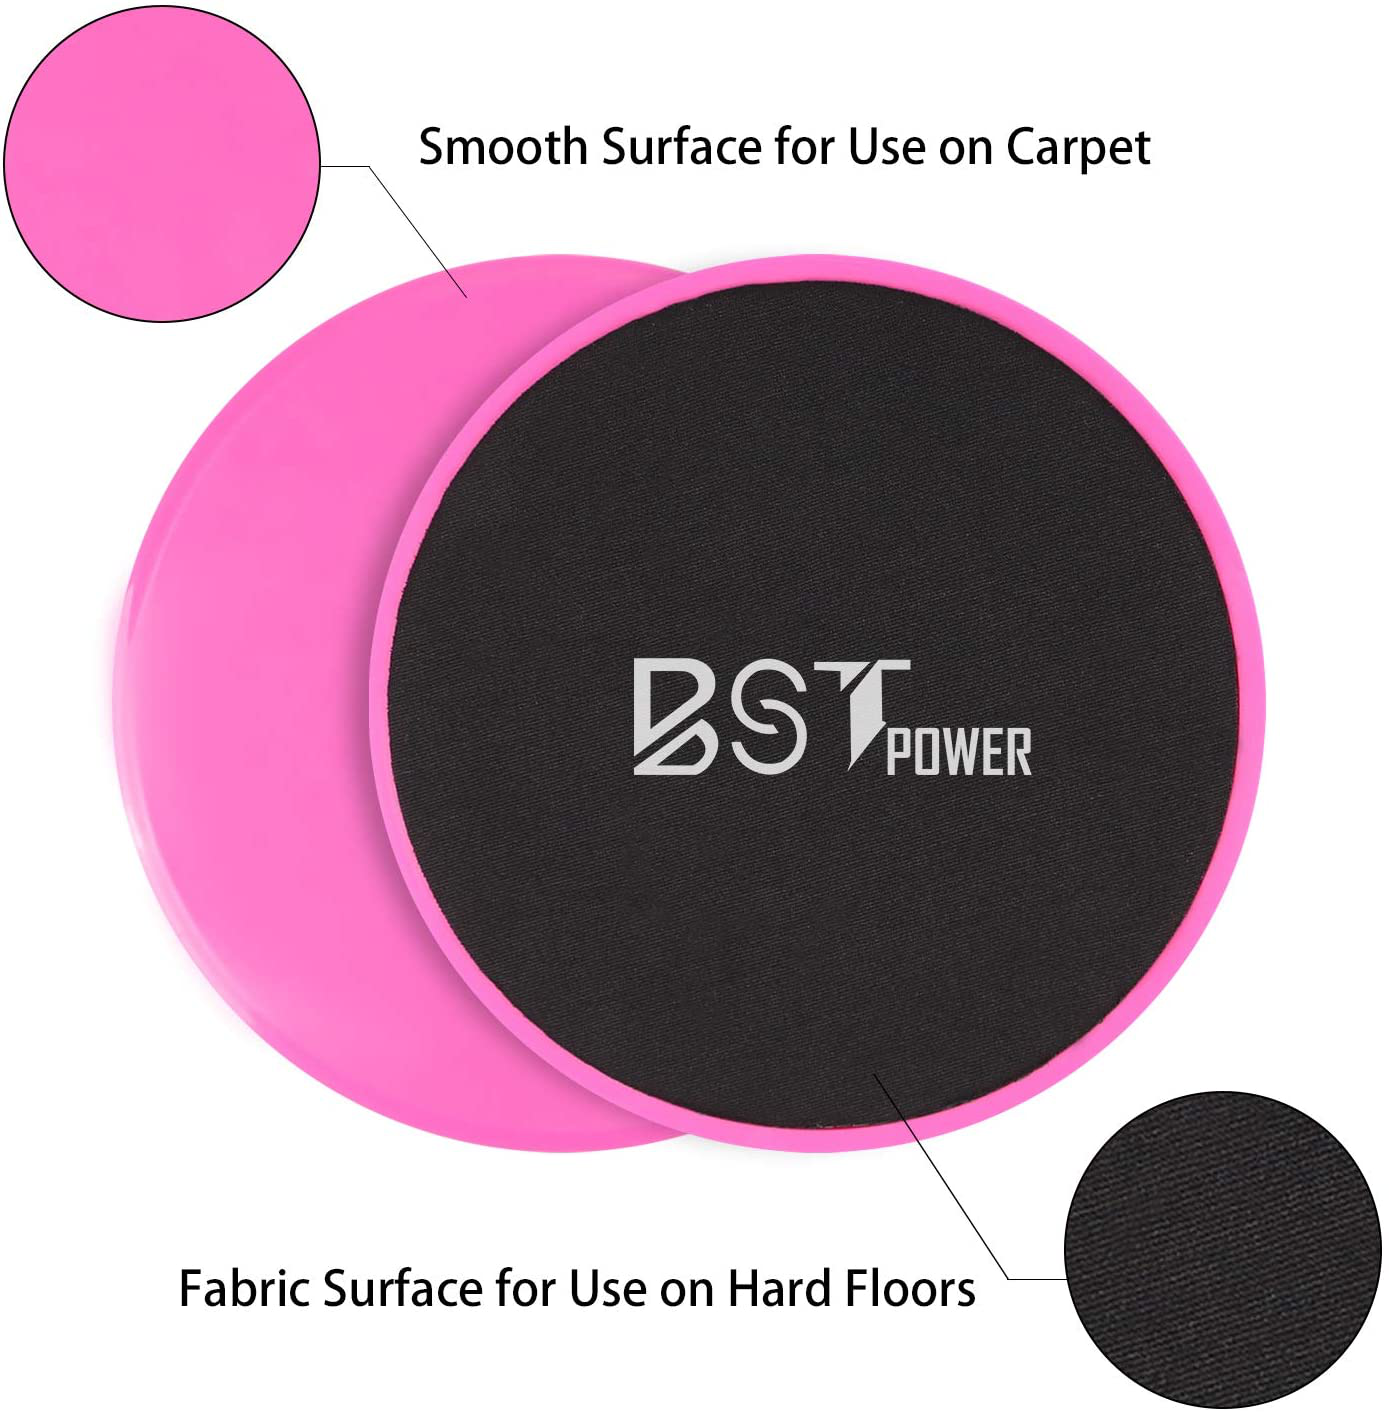 BSTPOWER Core Sliders, Dual Sided Exercise Sliders Workout Exercise Equipment Use on Carpet or Hardwood Floors (Set of 2)